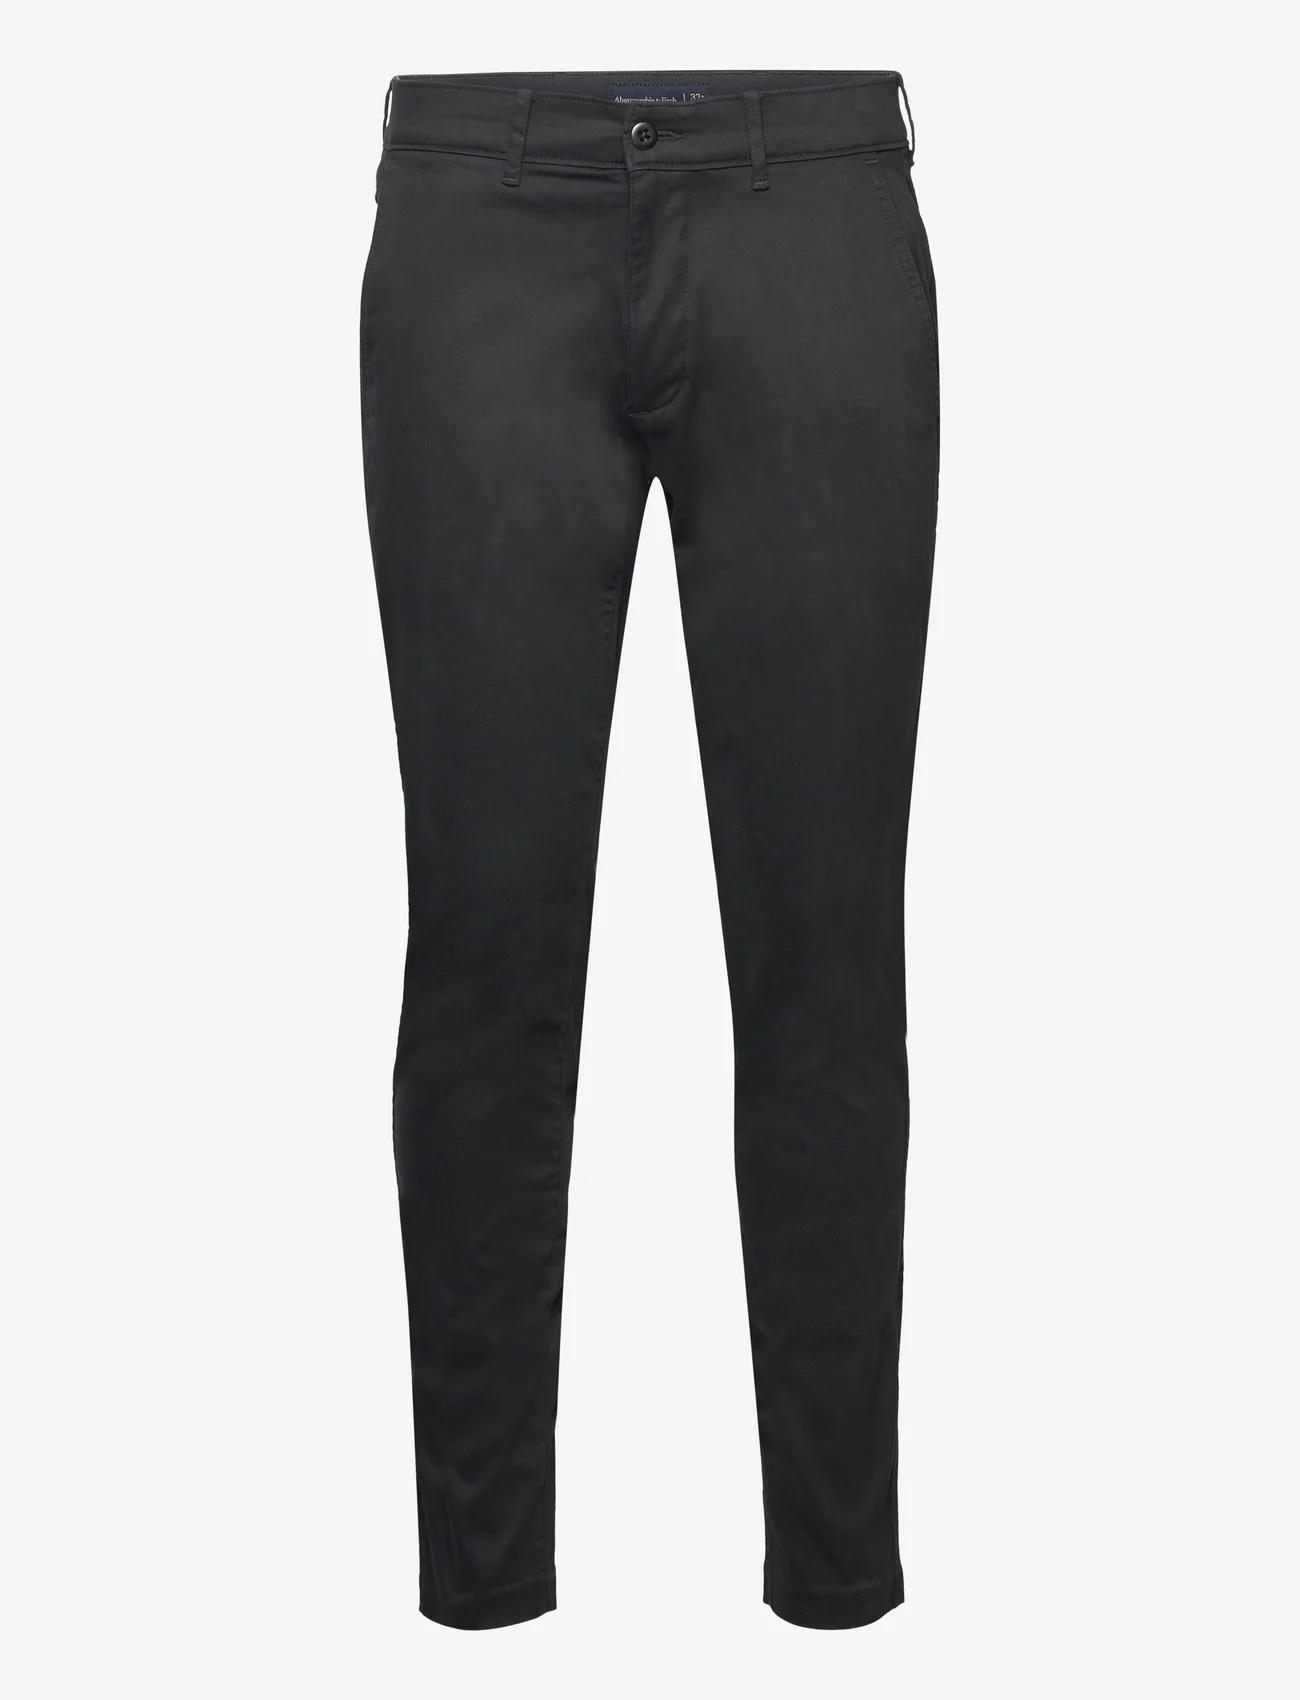 Abercrombie & Fitch - ANF MENS PANTS - „chino“ stiliaus kelnės - casual black - 0